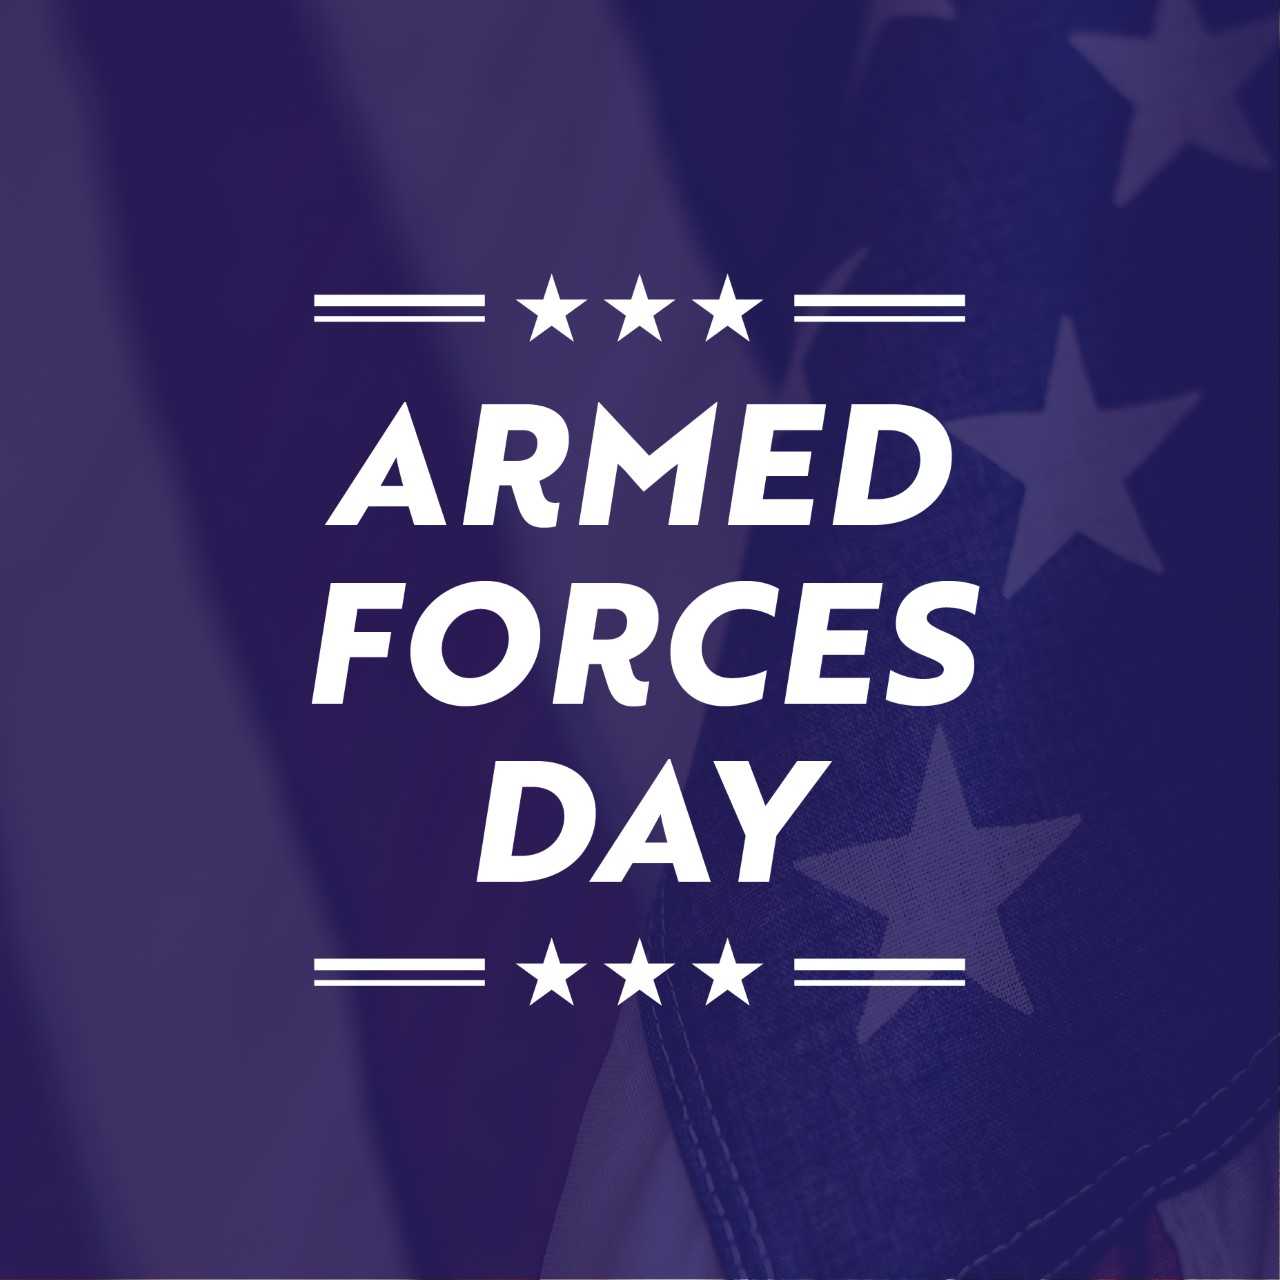 Armed Forces Day Adam Niemerg 9505